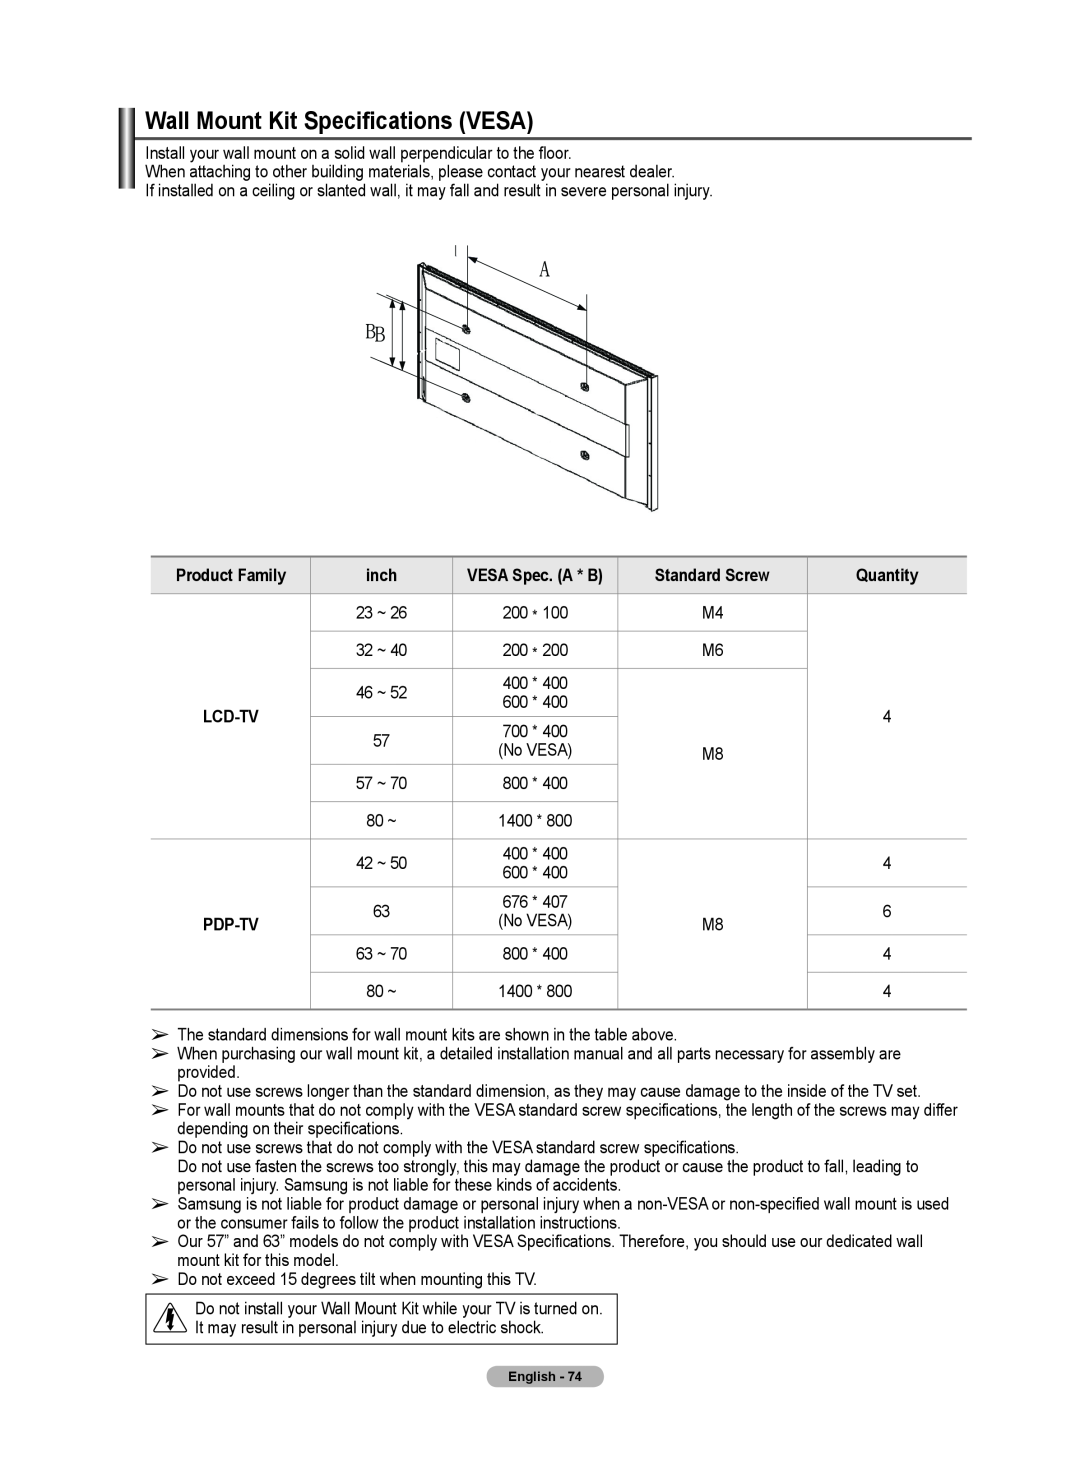 Samsung 510 user manual Product Family, inch, VESA Spec. A * B, Standard Screw, Quantity 